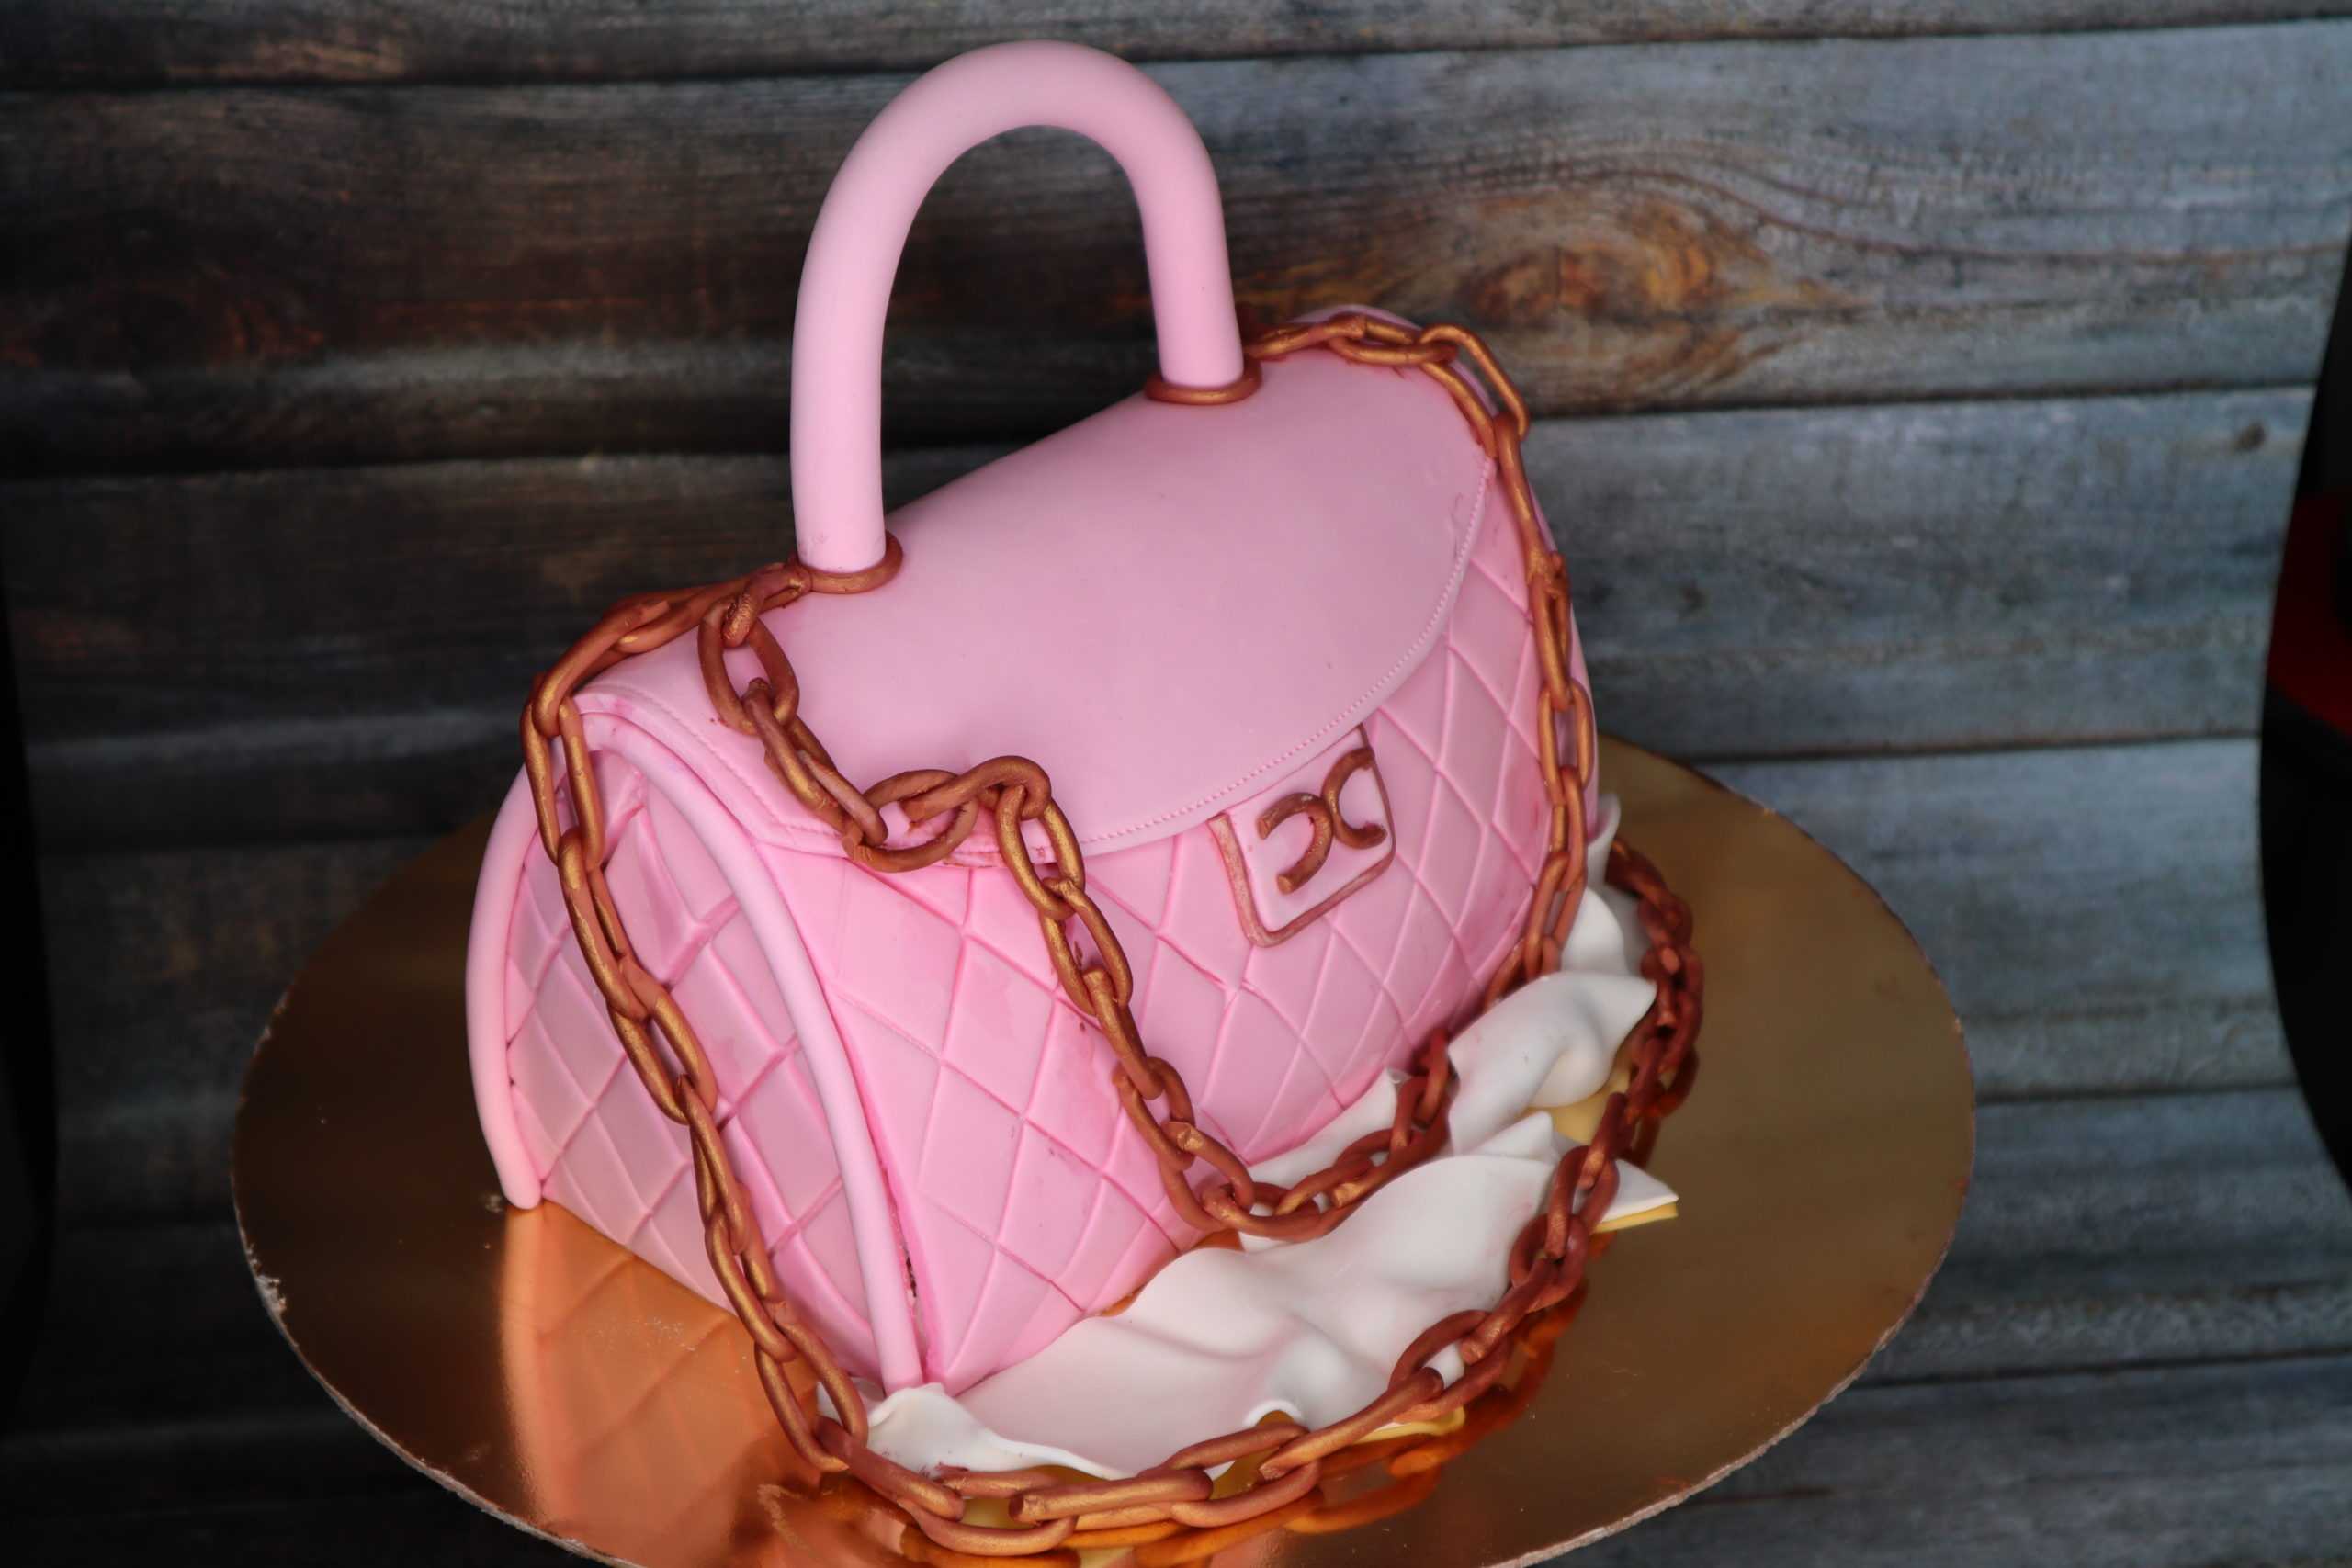 How to Make a Hand Bag Cake- Rosie's Dessert Spot - YouTube